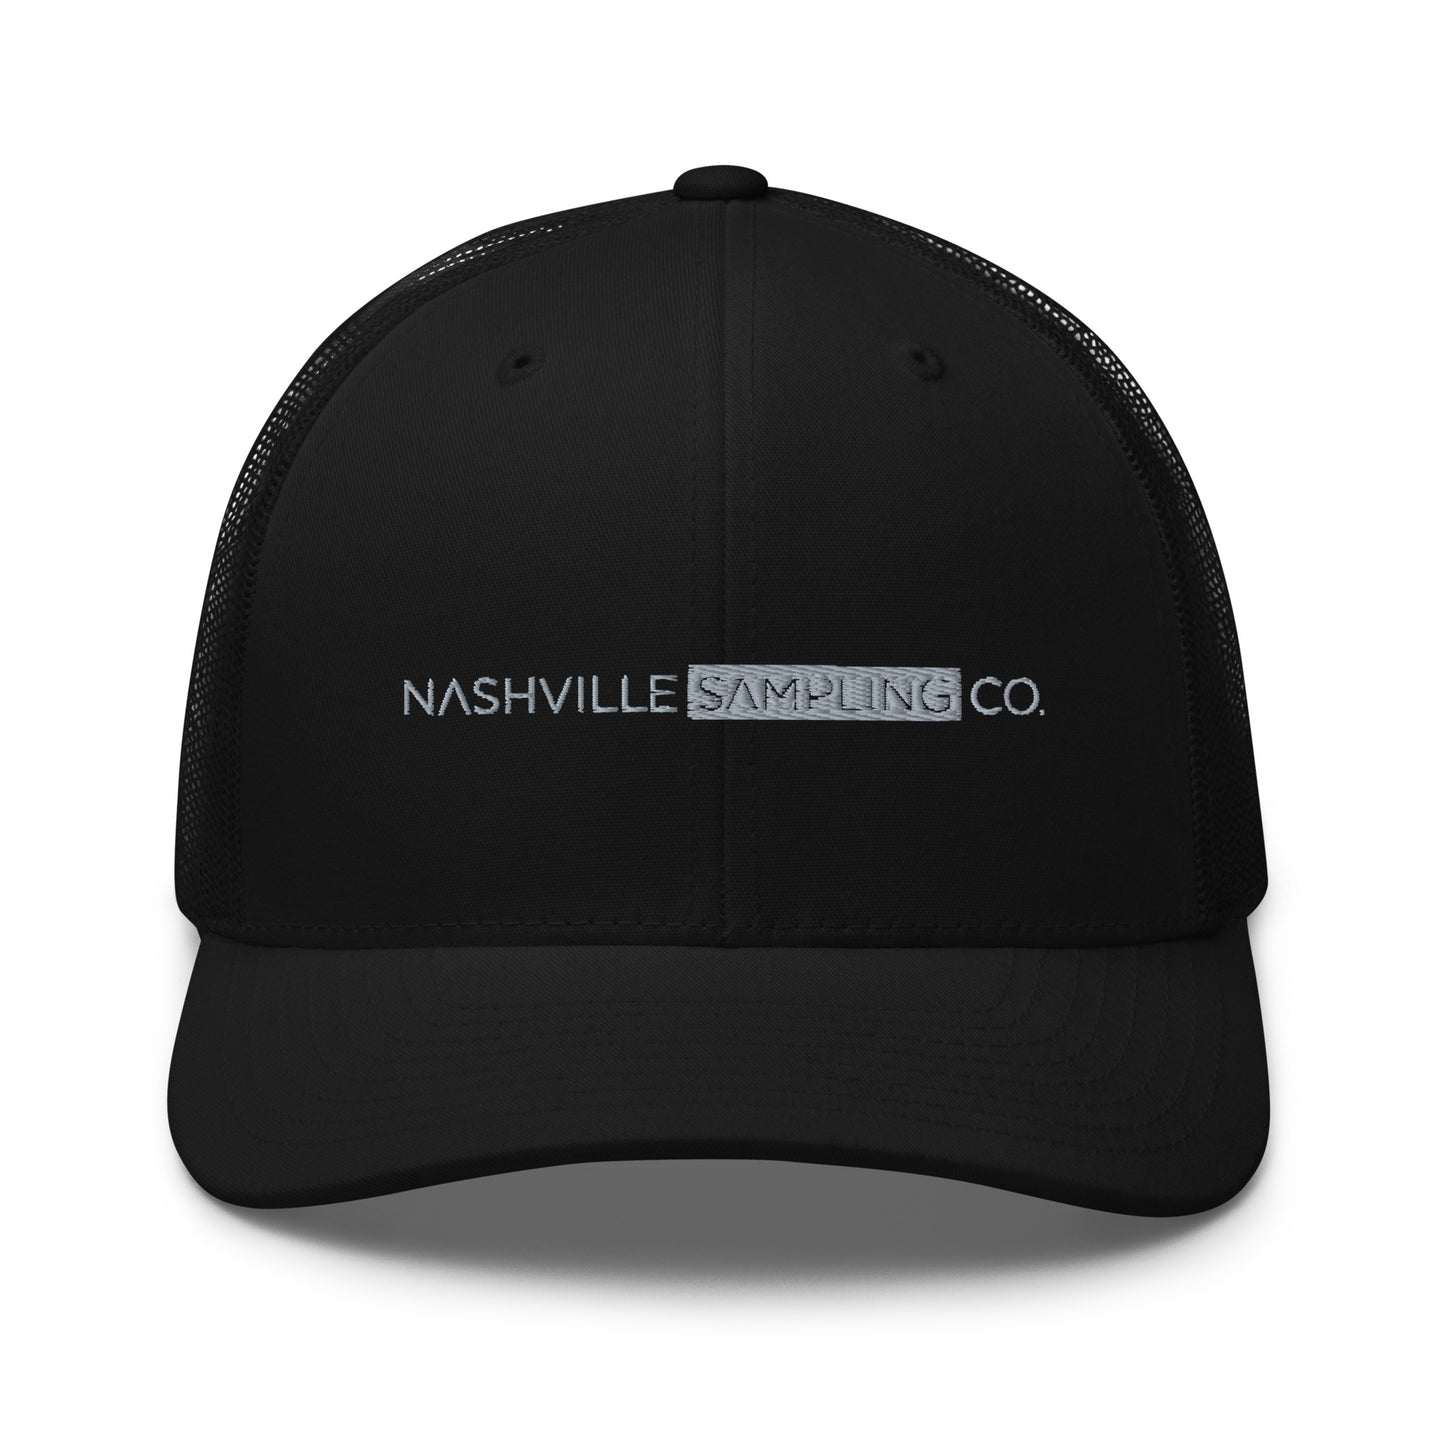 Nashville Sampling Co Embroidered Trucker Cap